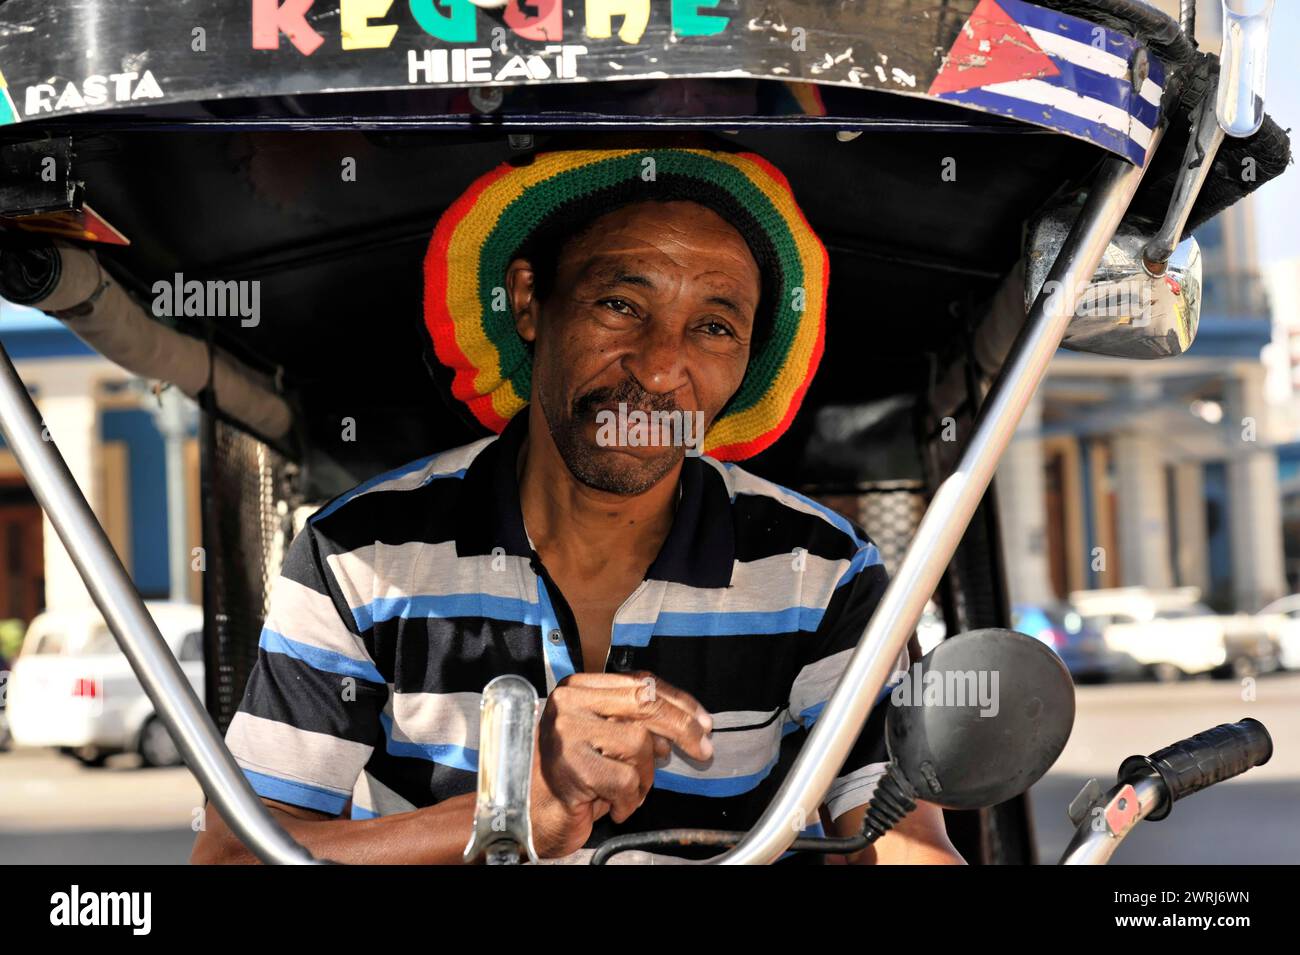 Smiling man with rasta hat driving biker taxi on city street, Havana, Cuba, Central America Stock Photo